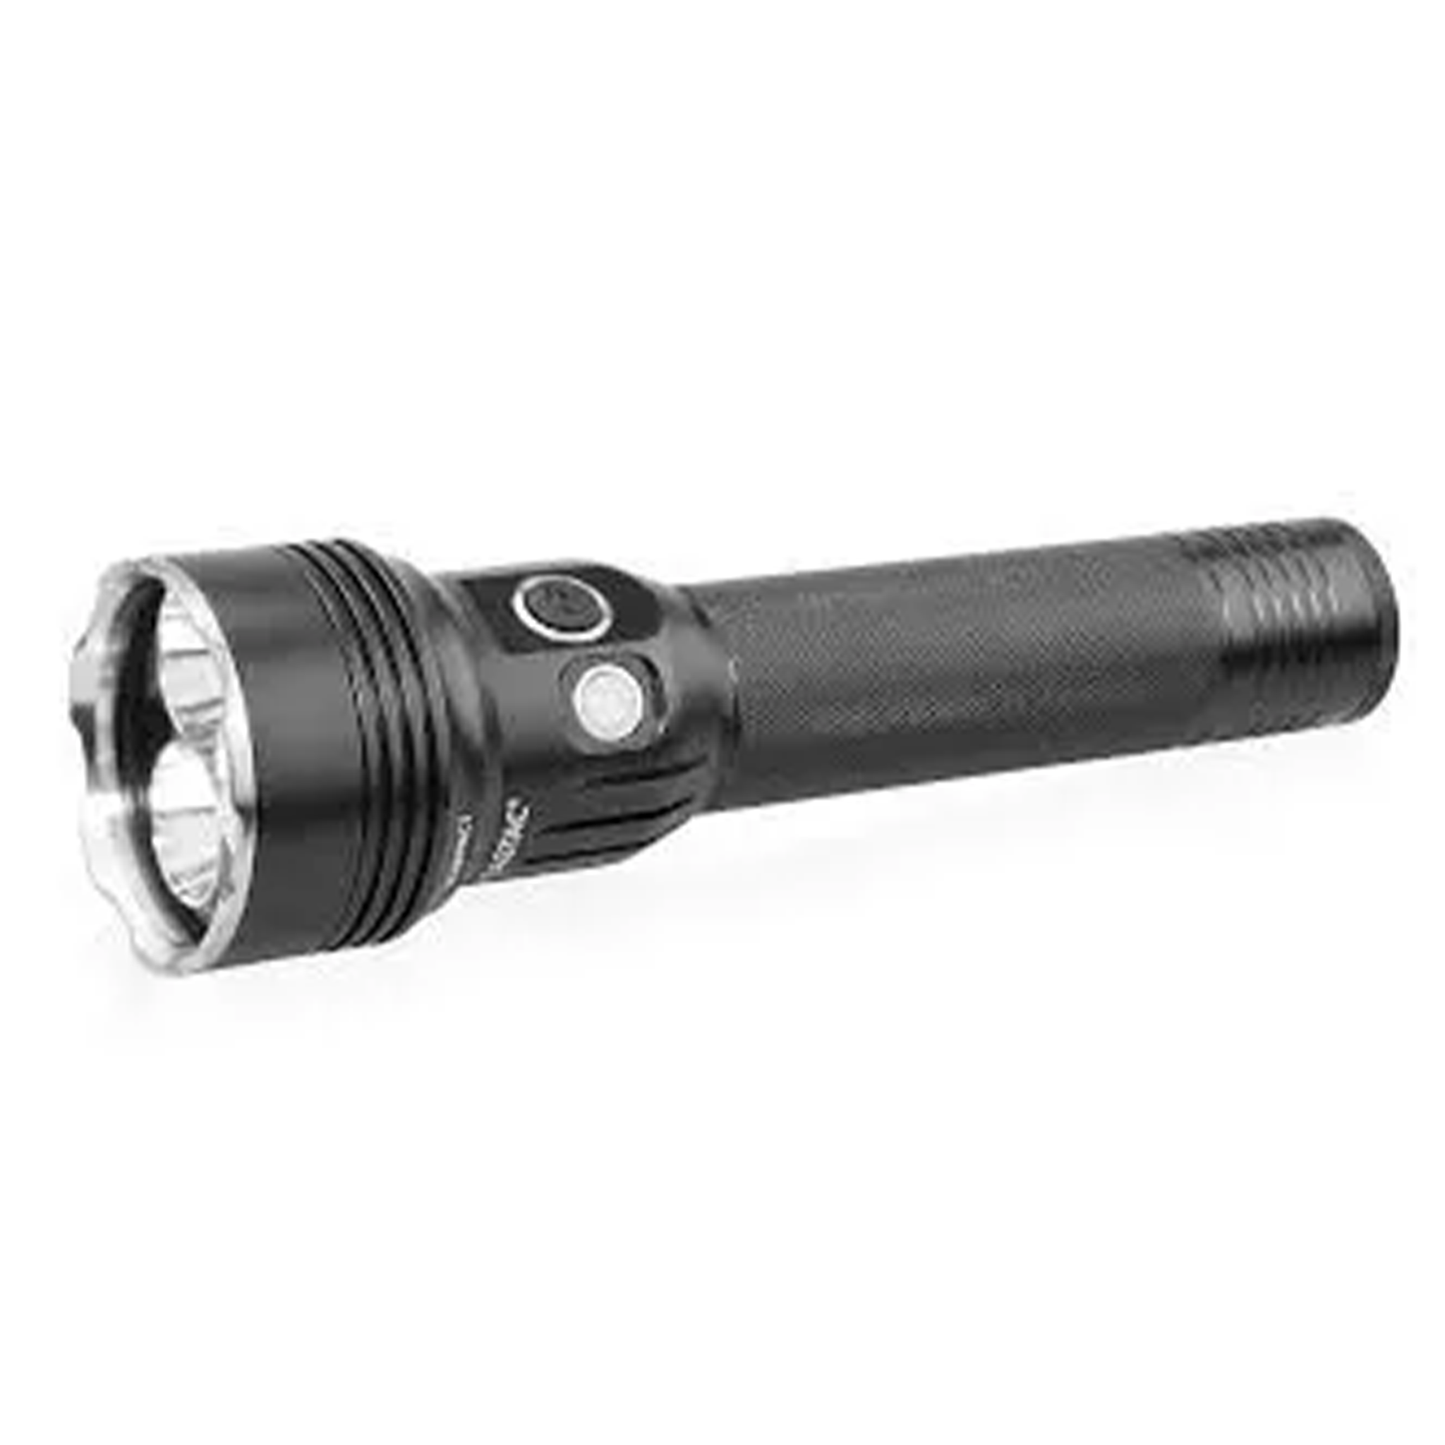 EagleTac MX30L2C-R 3100 Lumen USB Rechargeable Flashlight - 735m